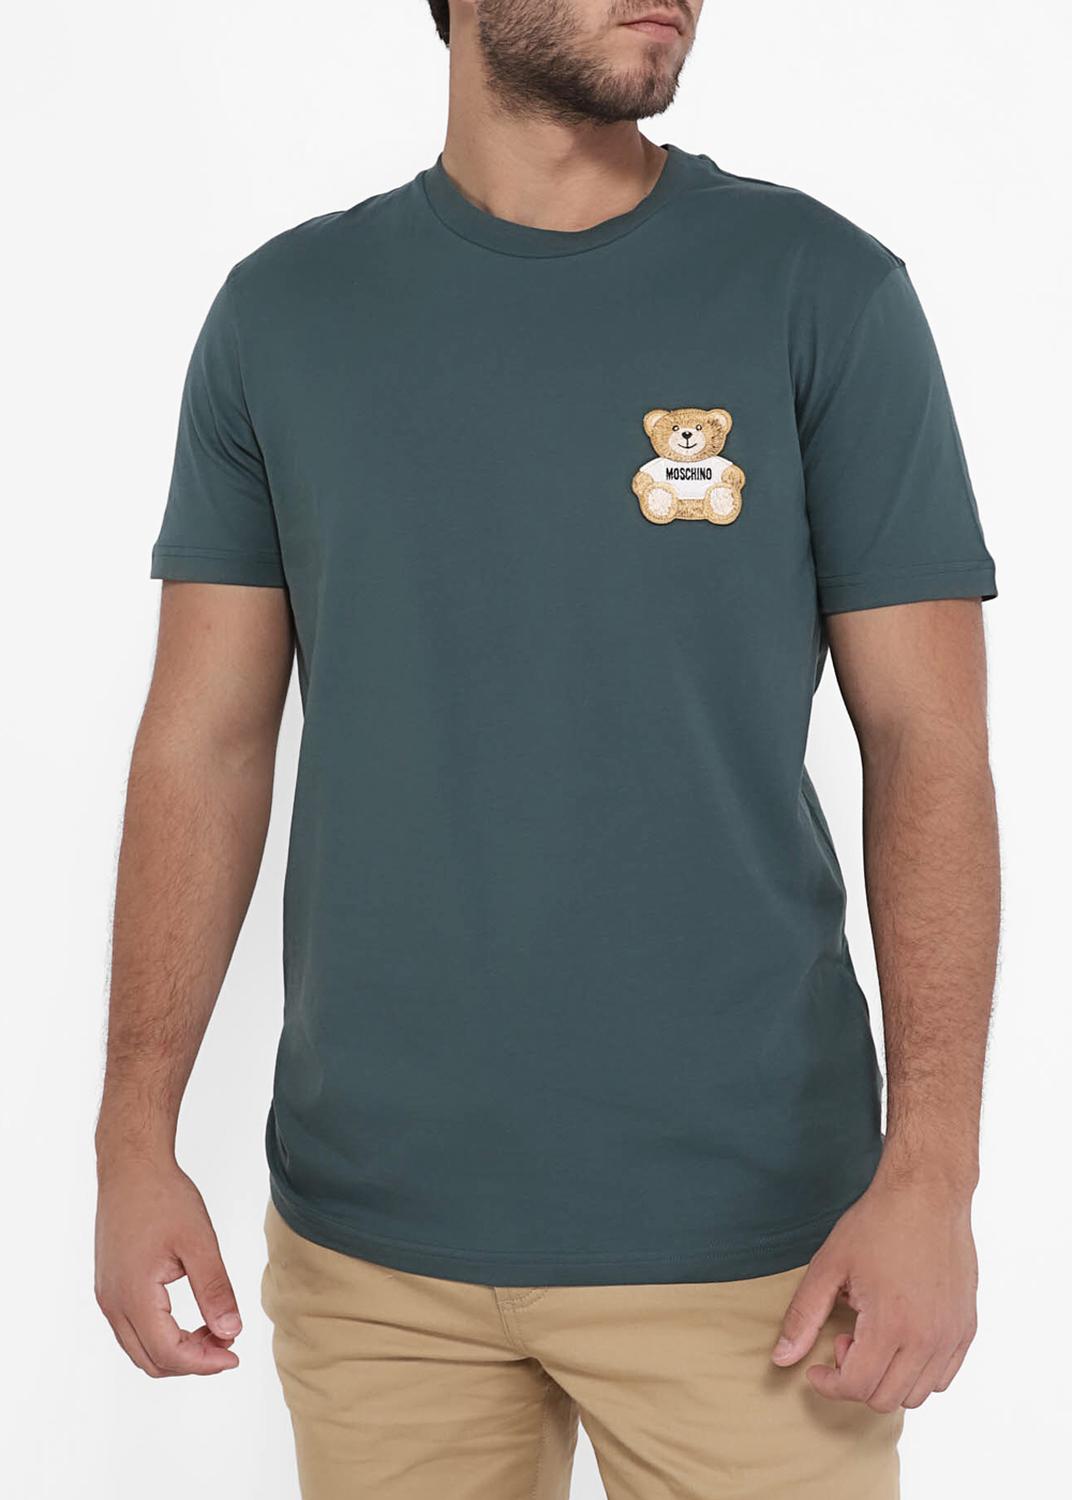 Moschino T-Shirt con estampado Teddy MSC-V0723 - LOUDER Lifestyle